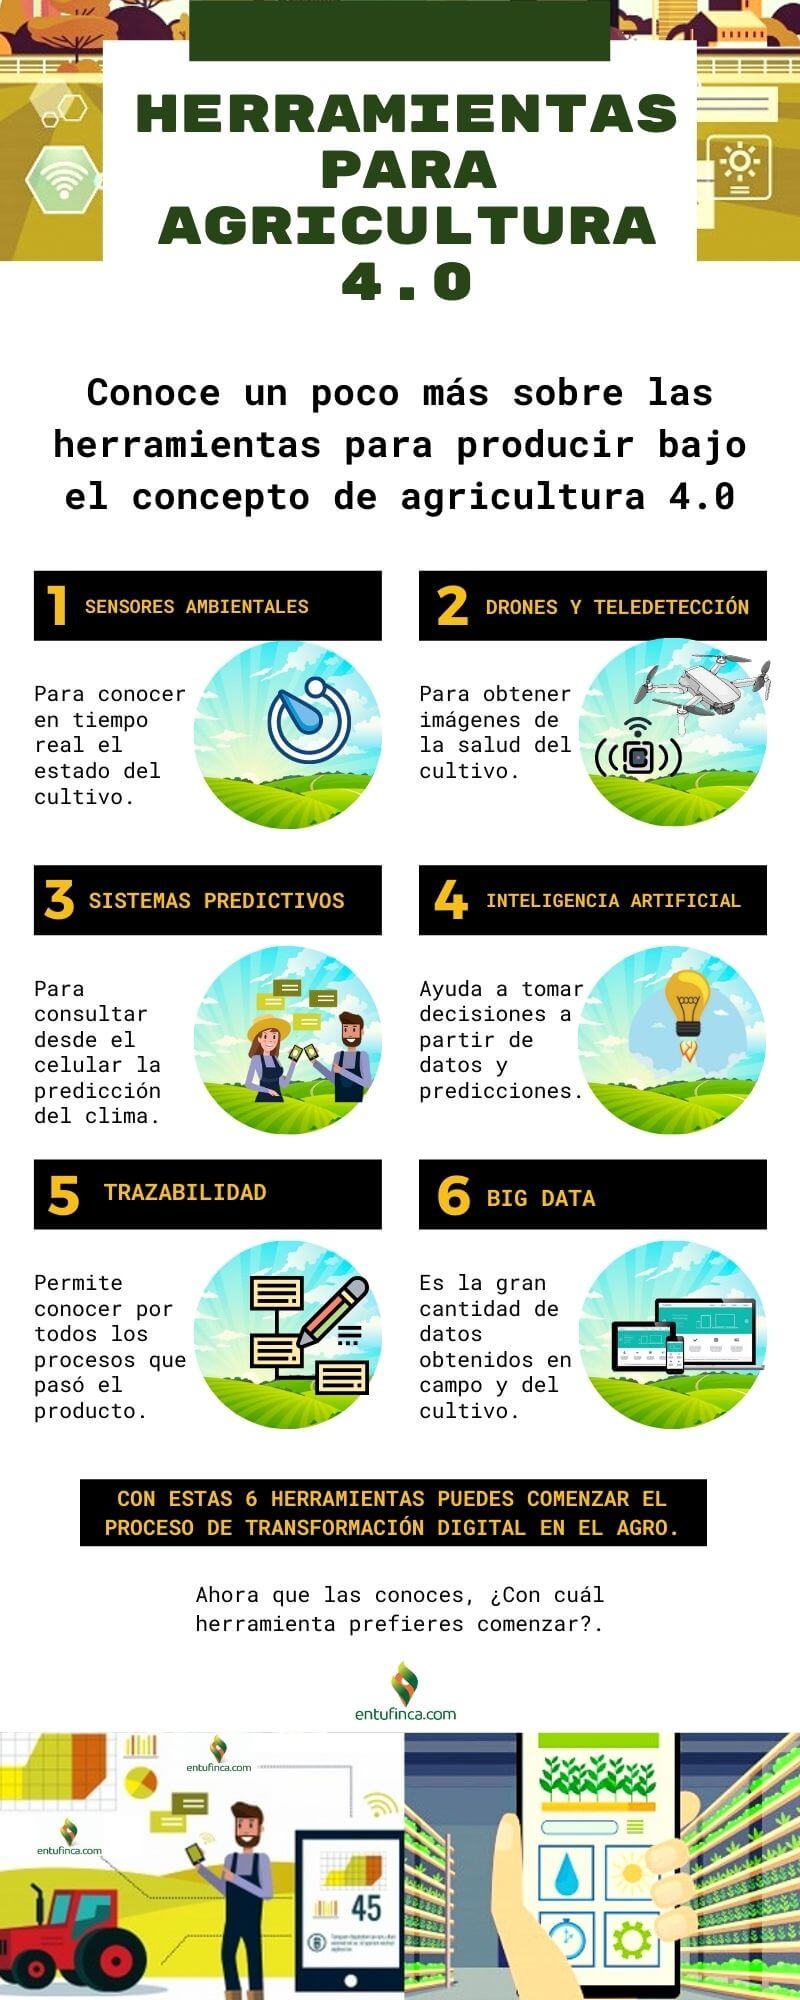 InfografíaHerramientasAgricultura4.0, EnTuFinca